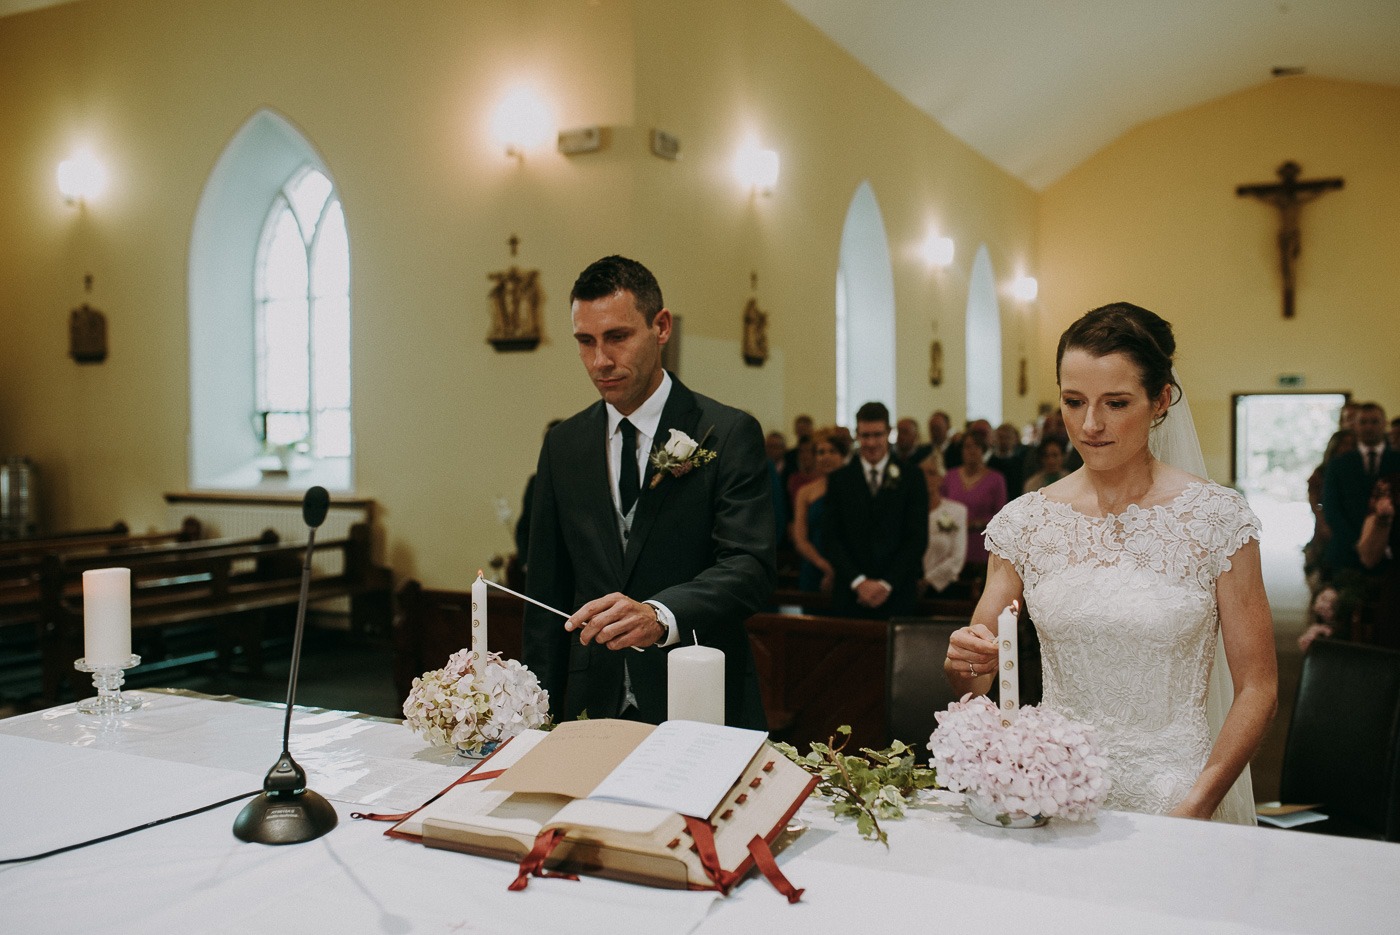 A man and woman cutting a wedding cake